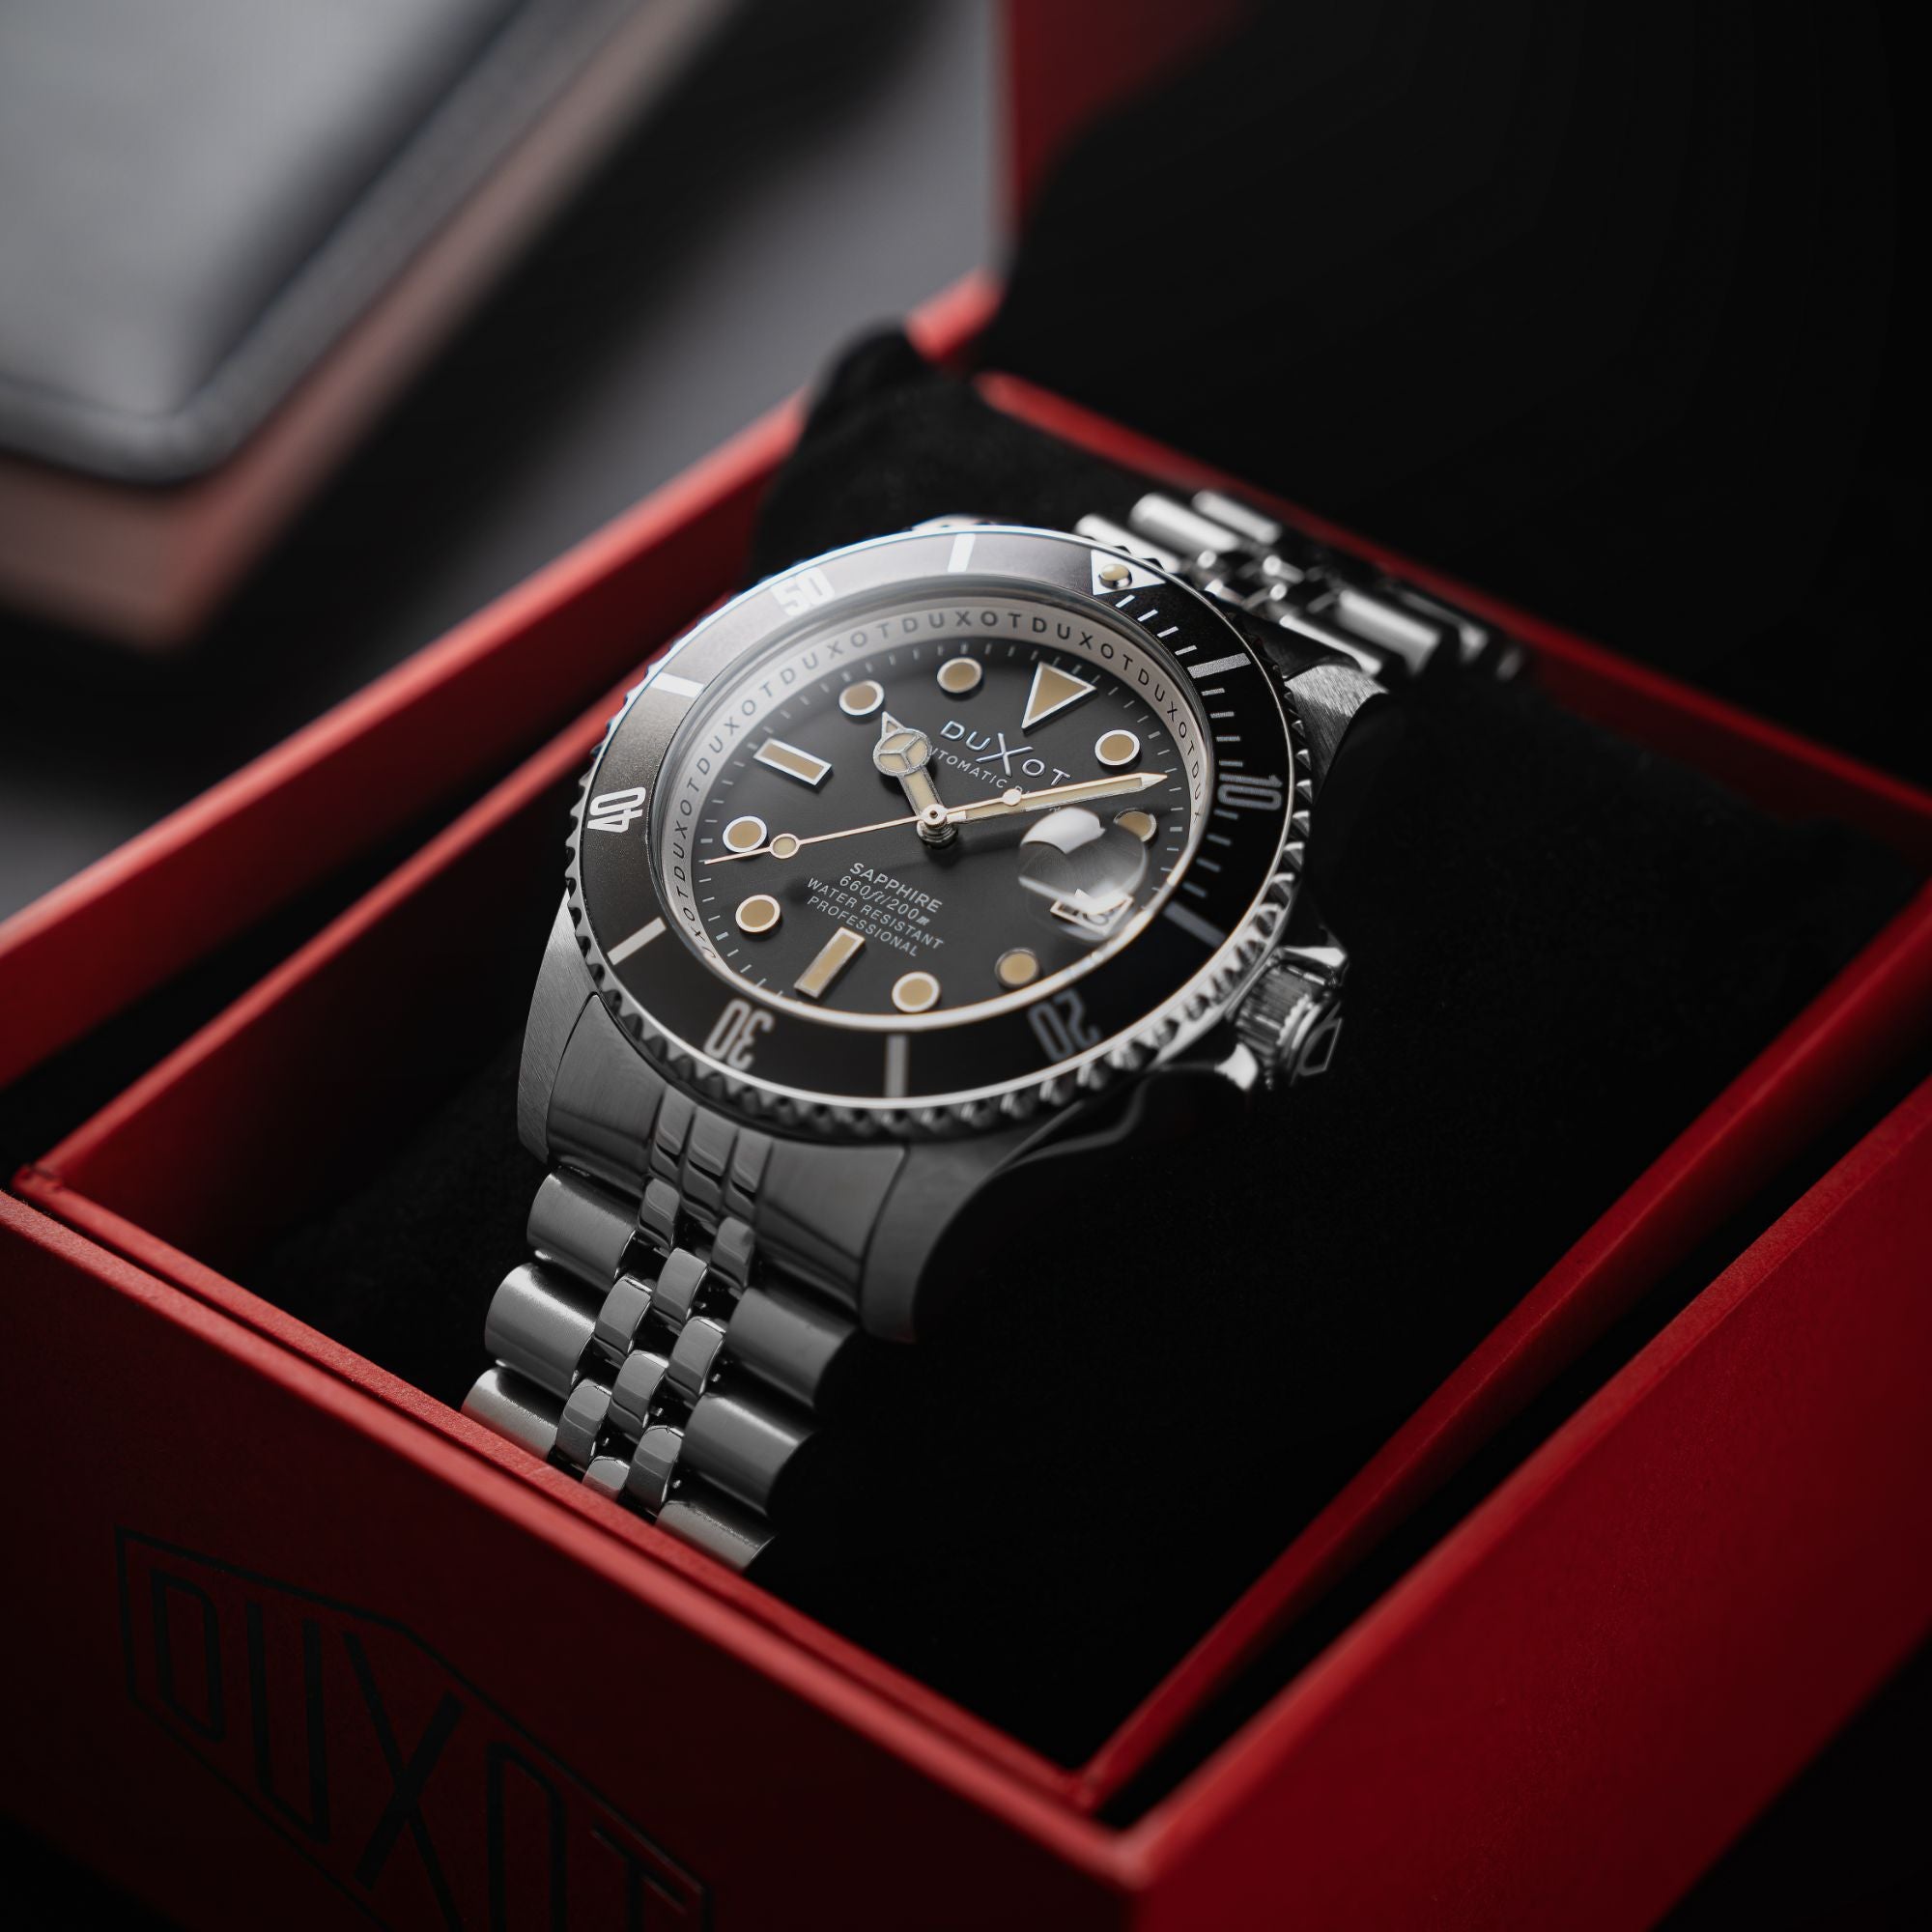 Duxot Atlantica Diver Automatic Charcoal Grey Men's Watch DX-2057-55